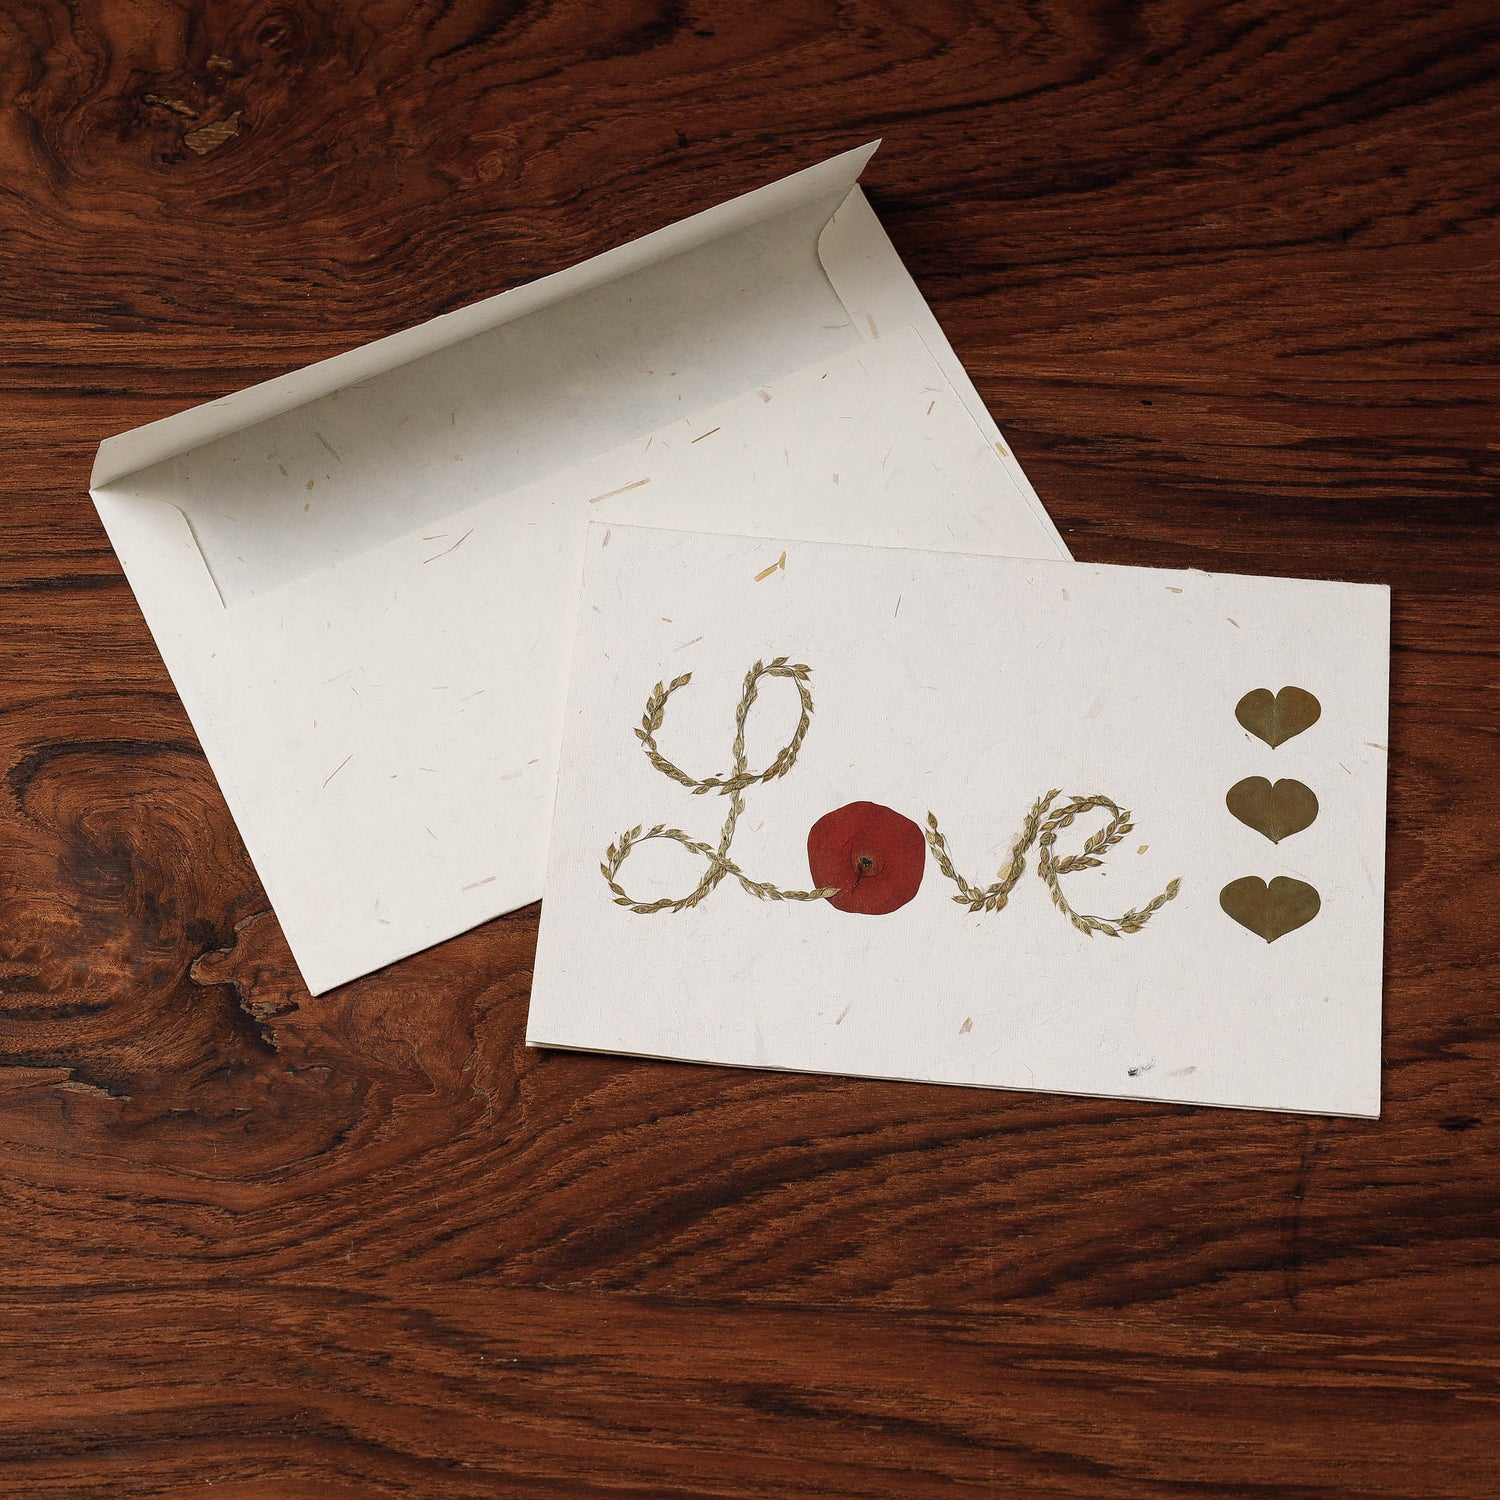 Intricate Flower Art Handmade Paper Greeting Card (Single Piece)